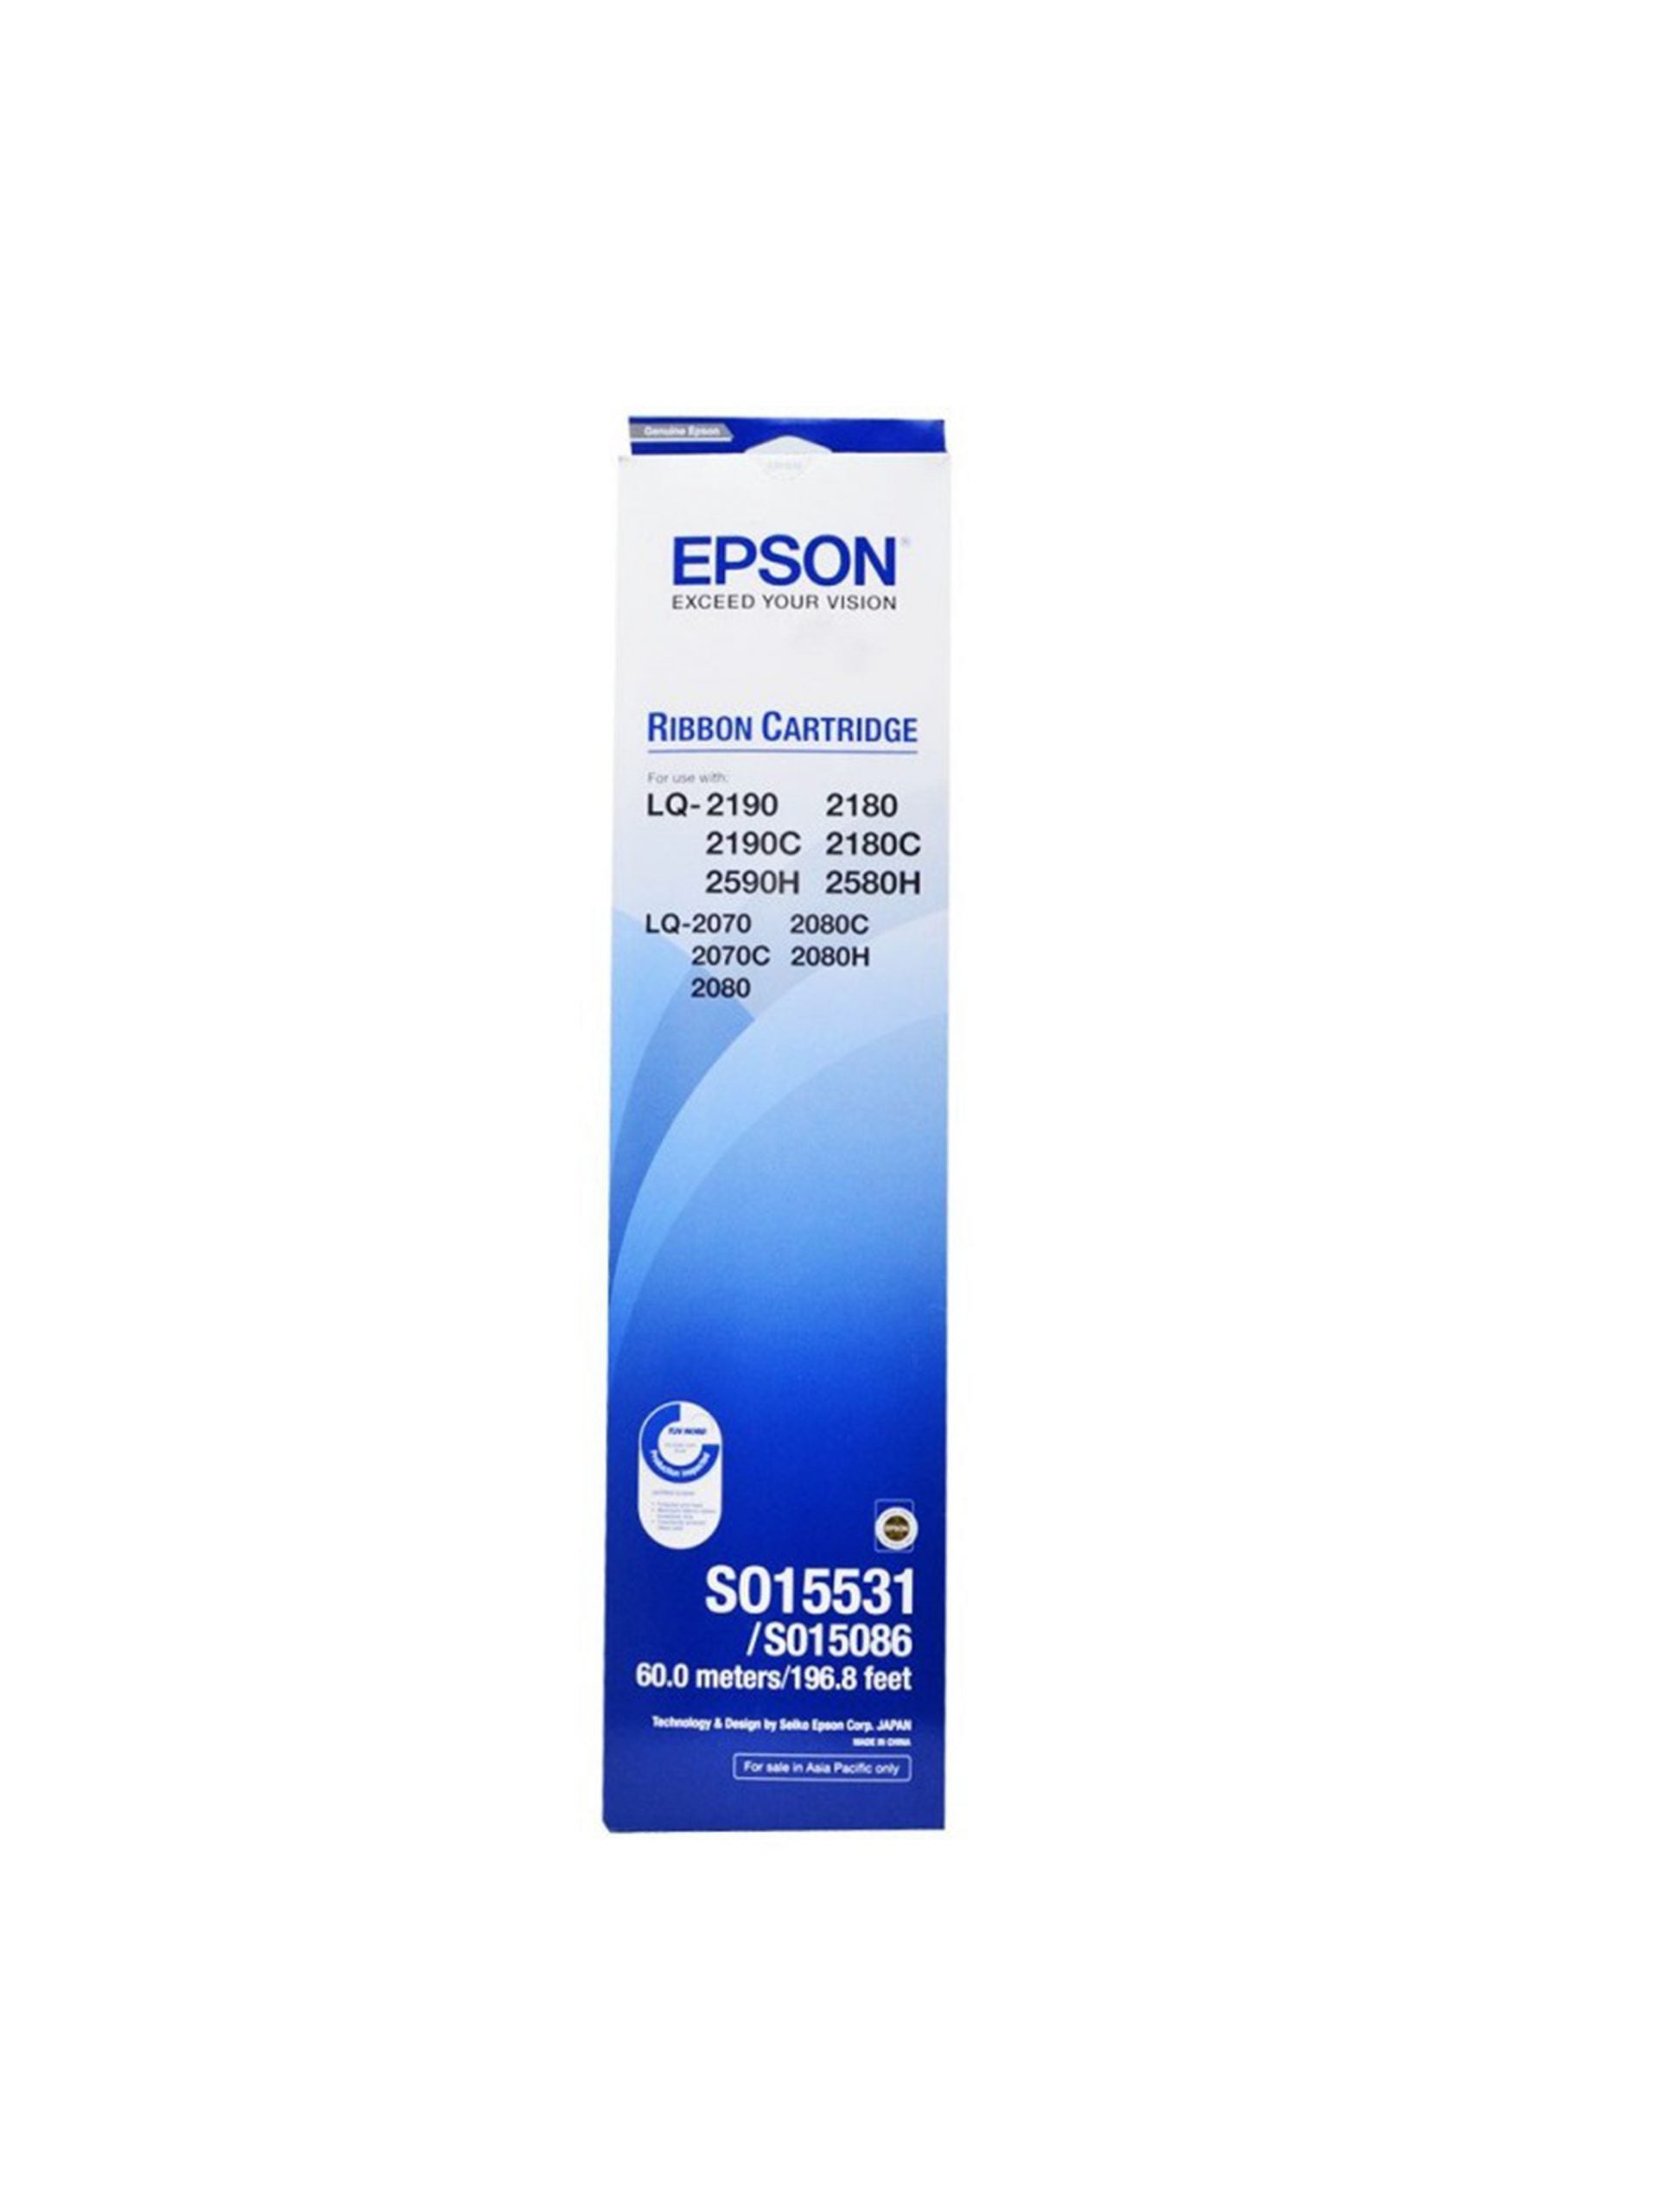 Epson LQ-2170/2180/2190 Ribbon Cartridge